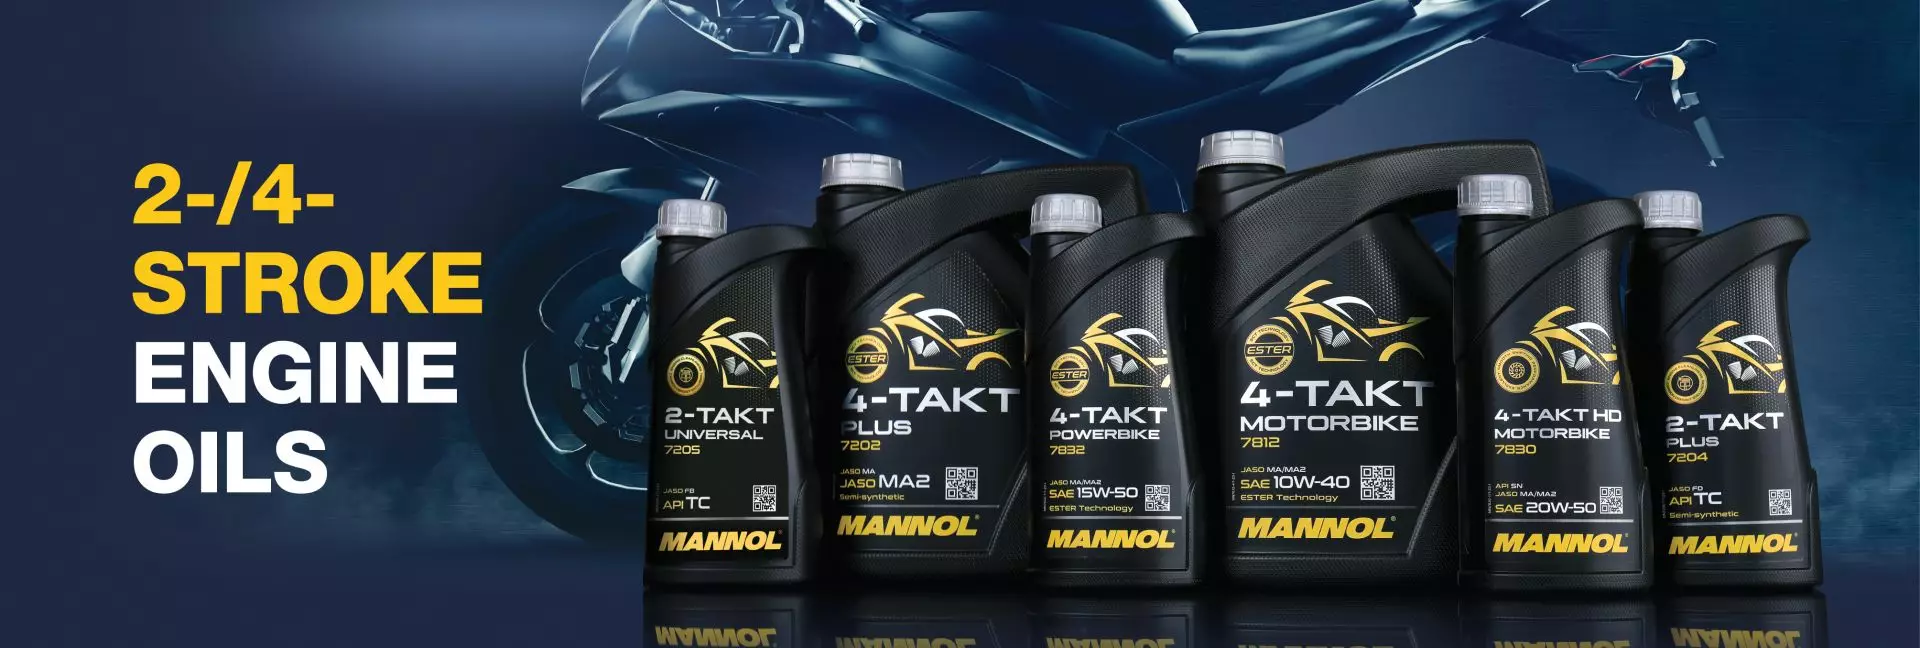 Mannol  Automotive oils and lubricants